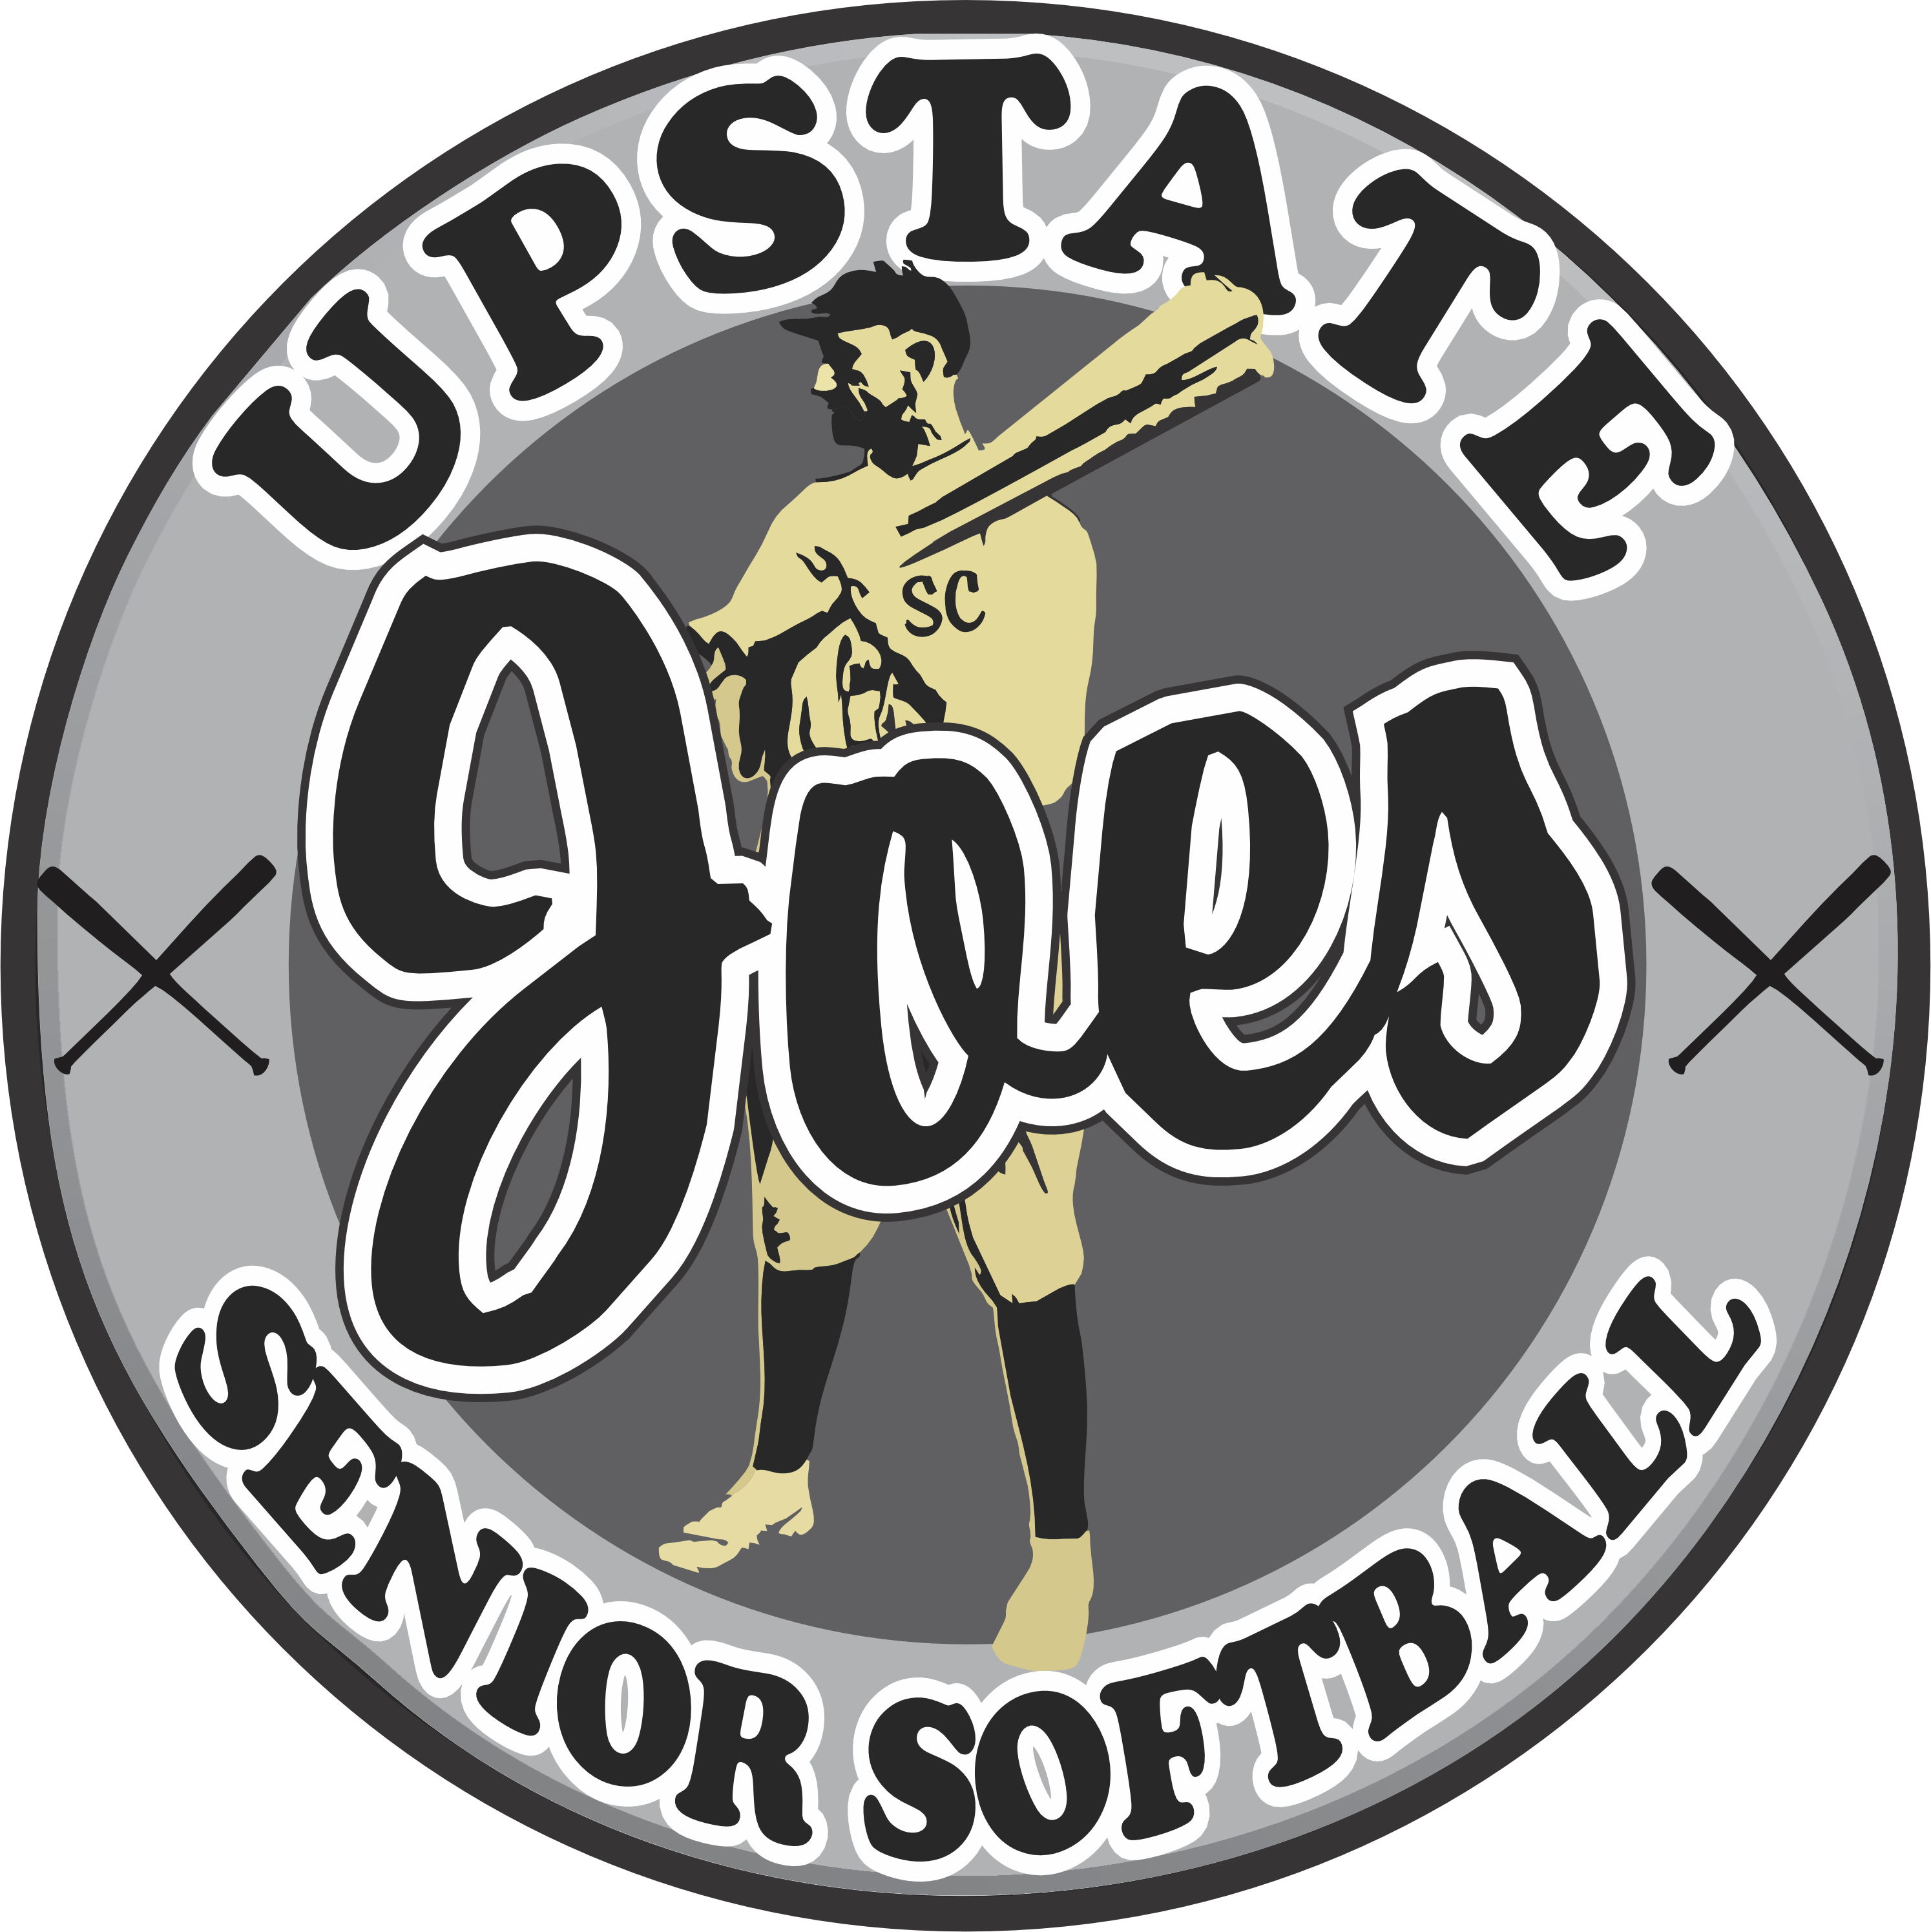 Upstate Joes Senior Softball